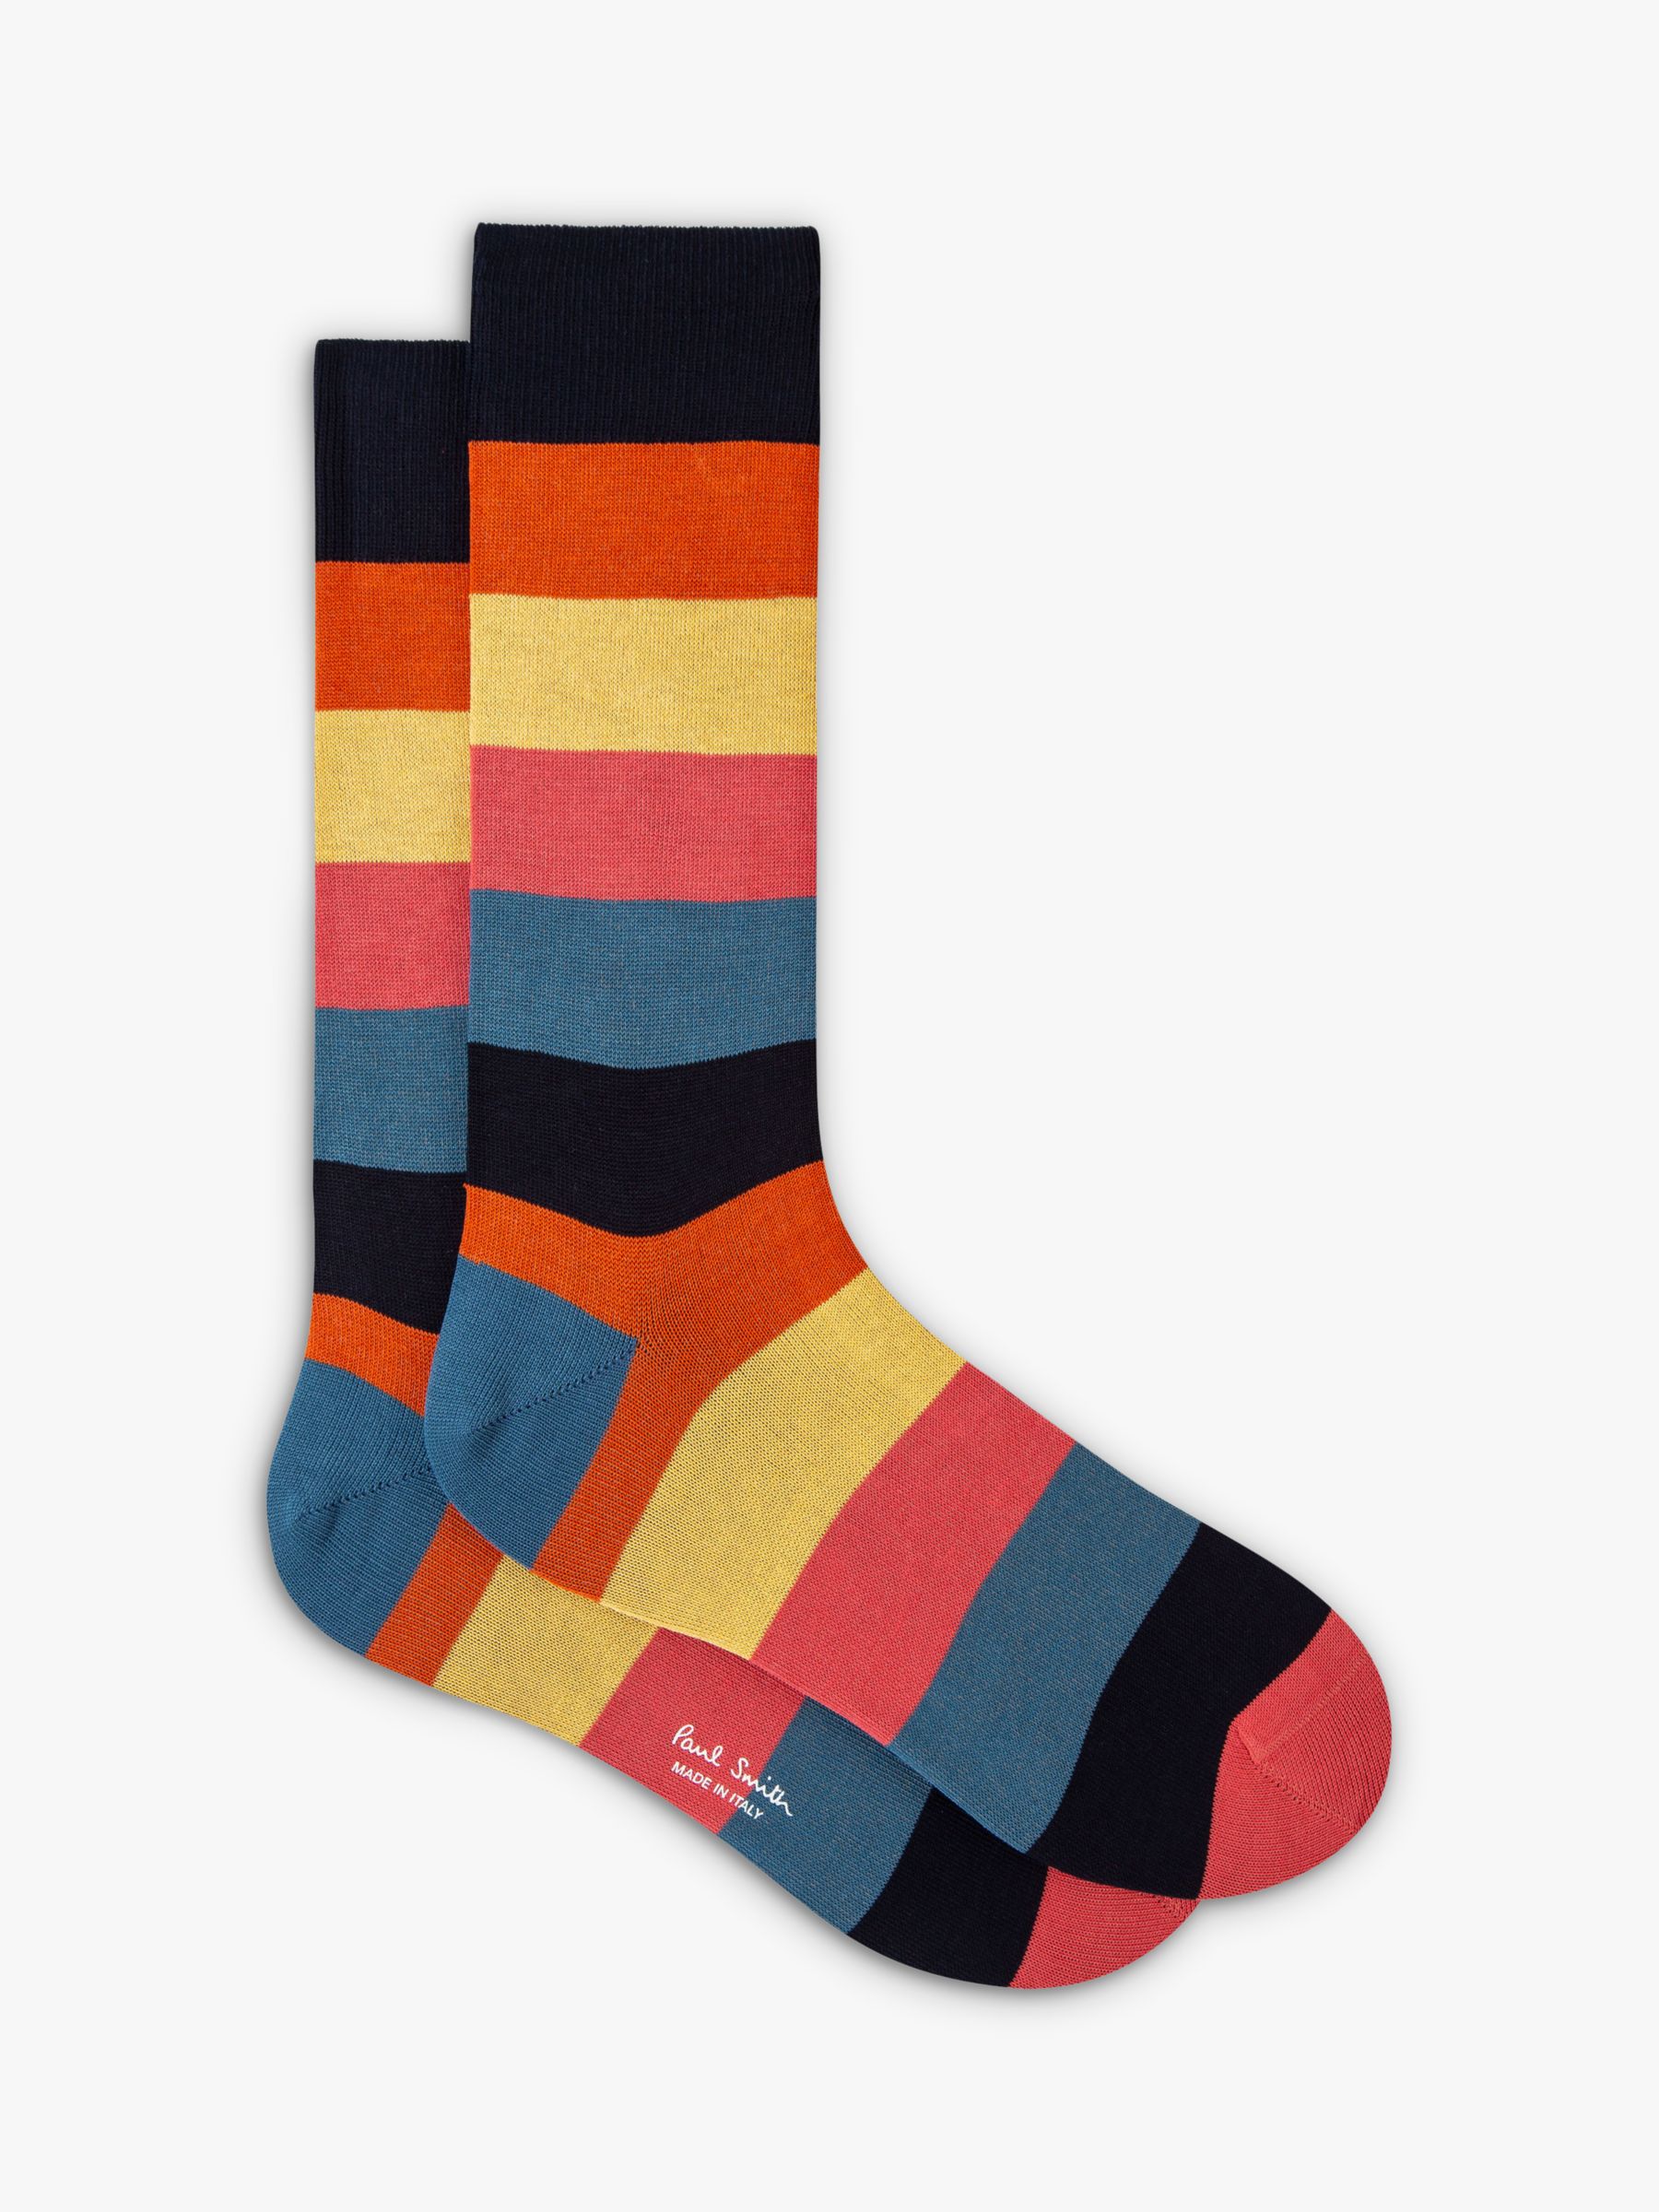 Paul Smith Painted Artist Stripe Socks, One Size, Multi